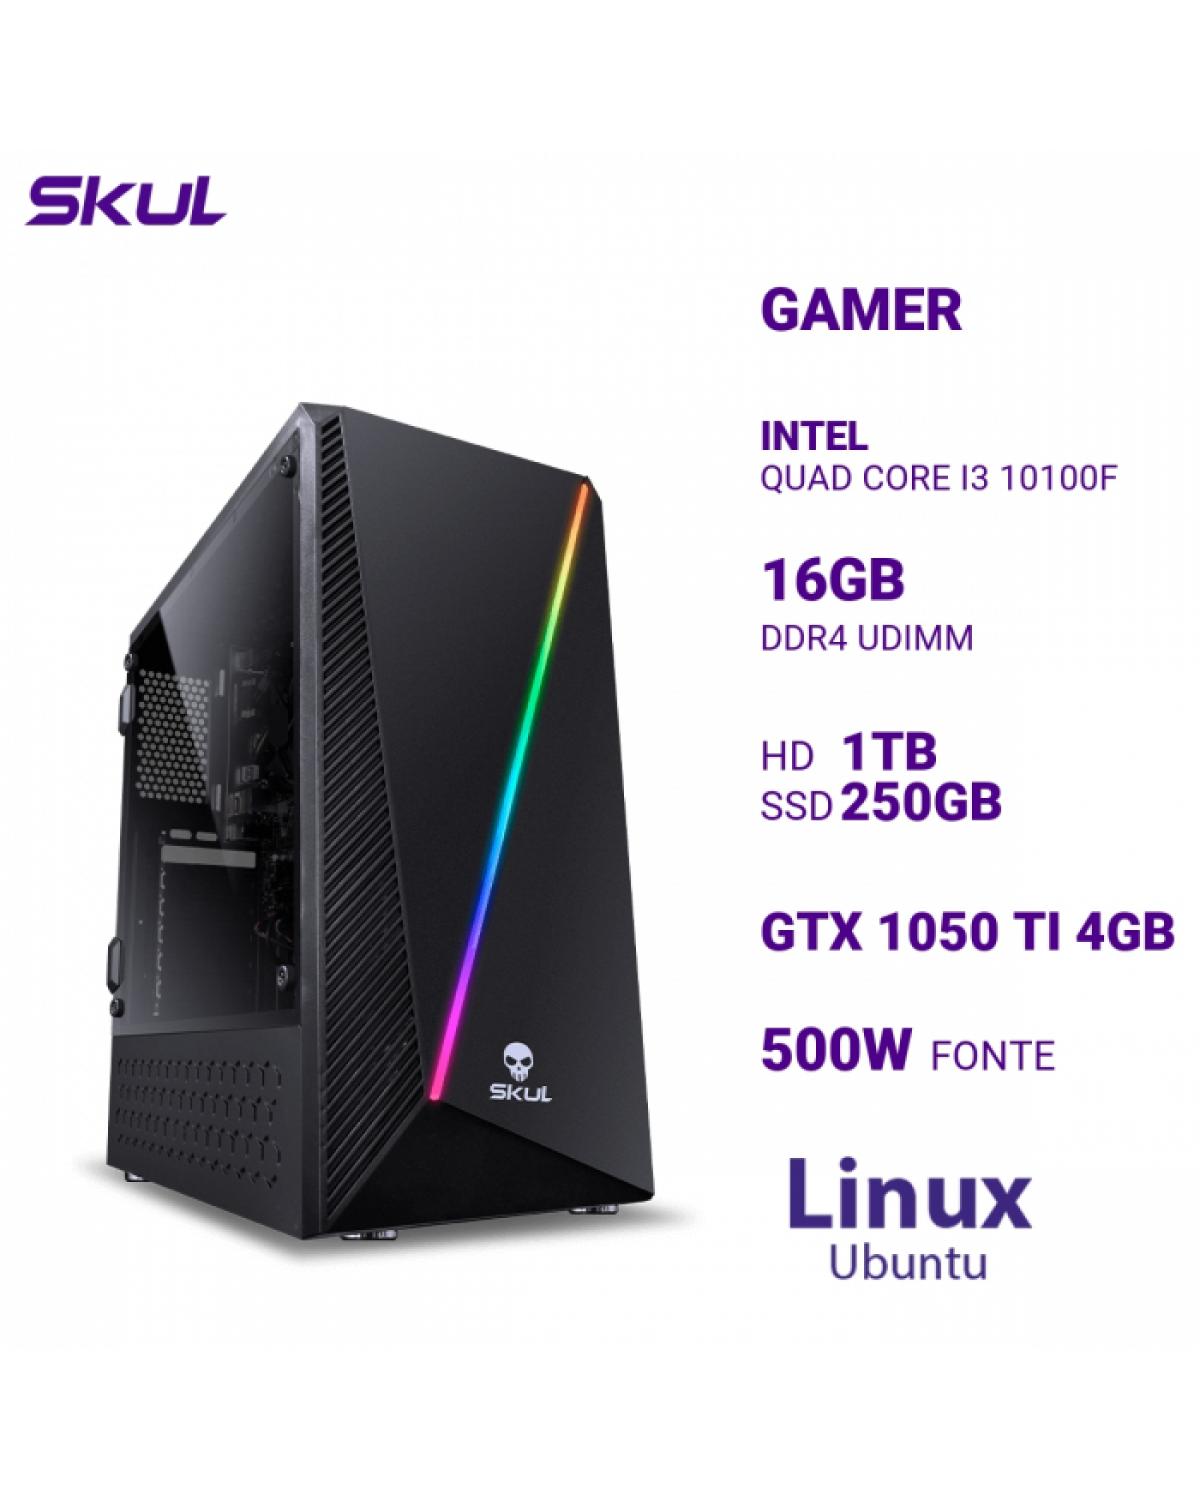 COMPUTADOR GAMER 3000 QUAD CORE I3 10100F MEM 16GB DDR4 HD 1TB SSD 250GB NVME GTX 1050 TI 4GB FONTE 500W LINUX